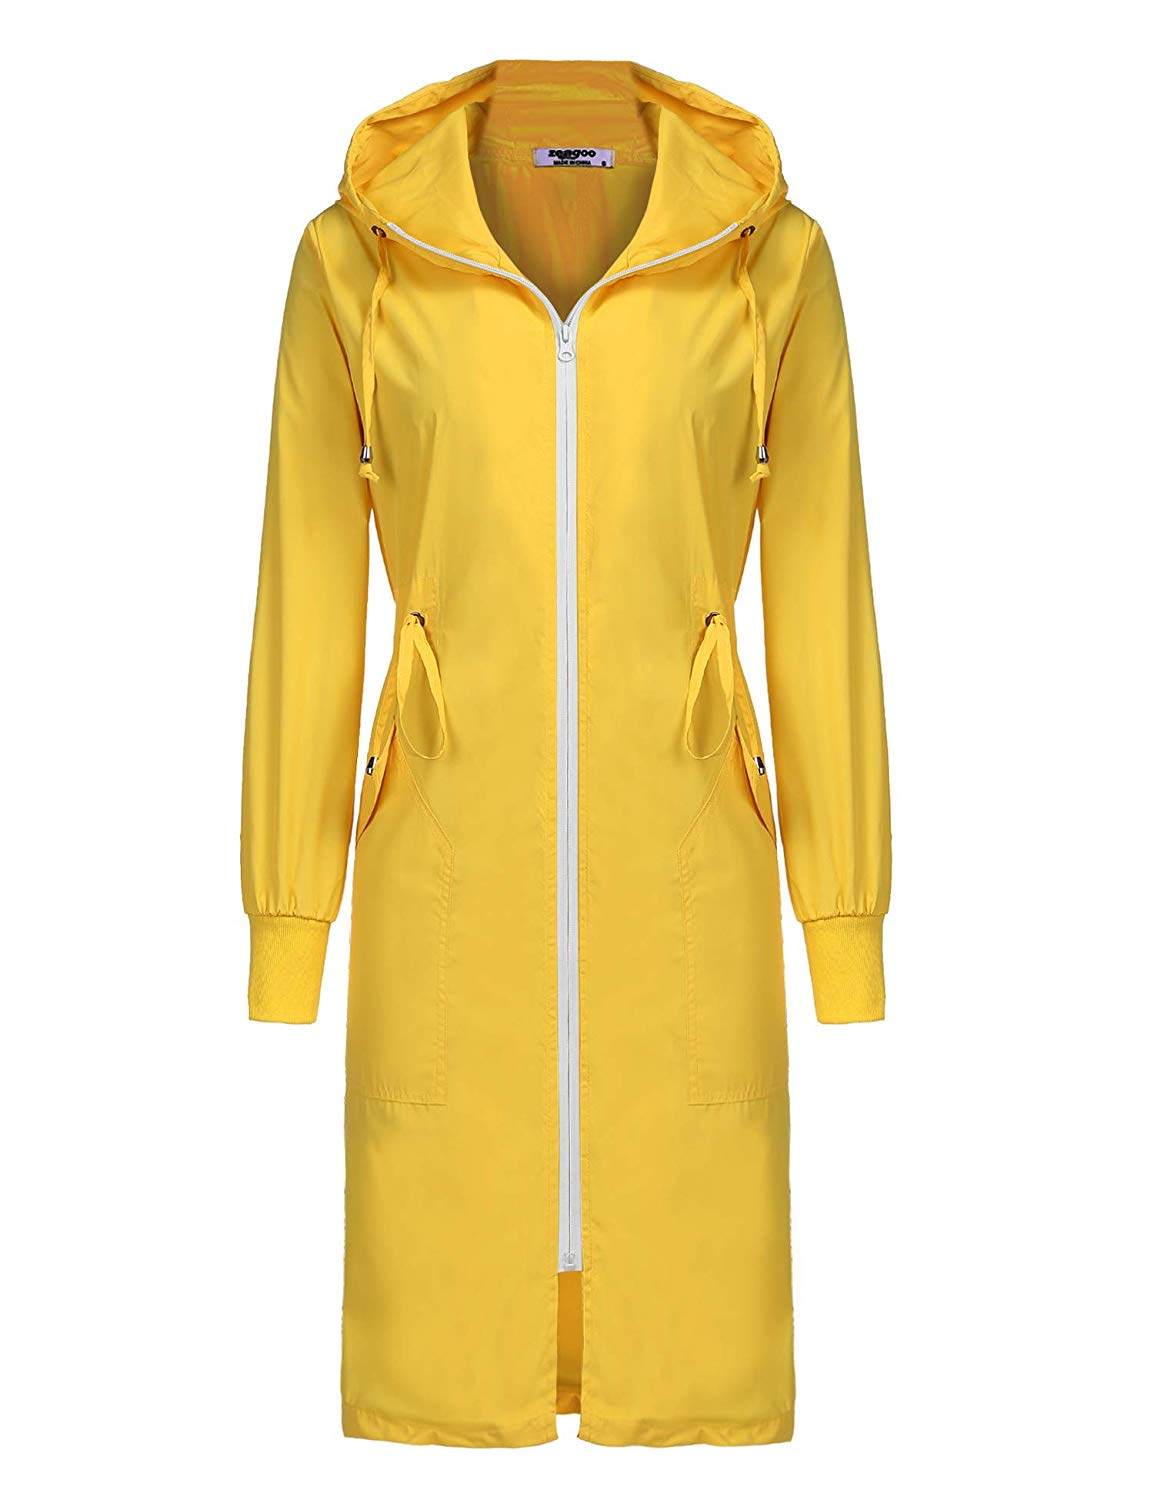 womens hooded rain coats